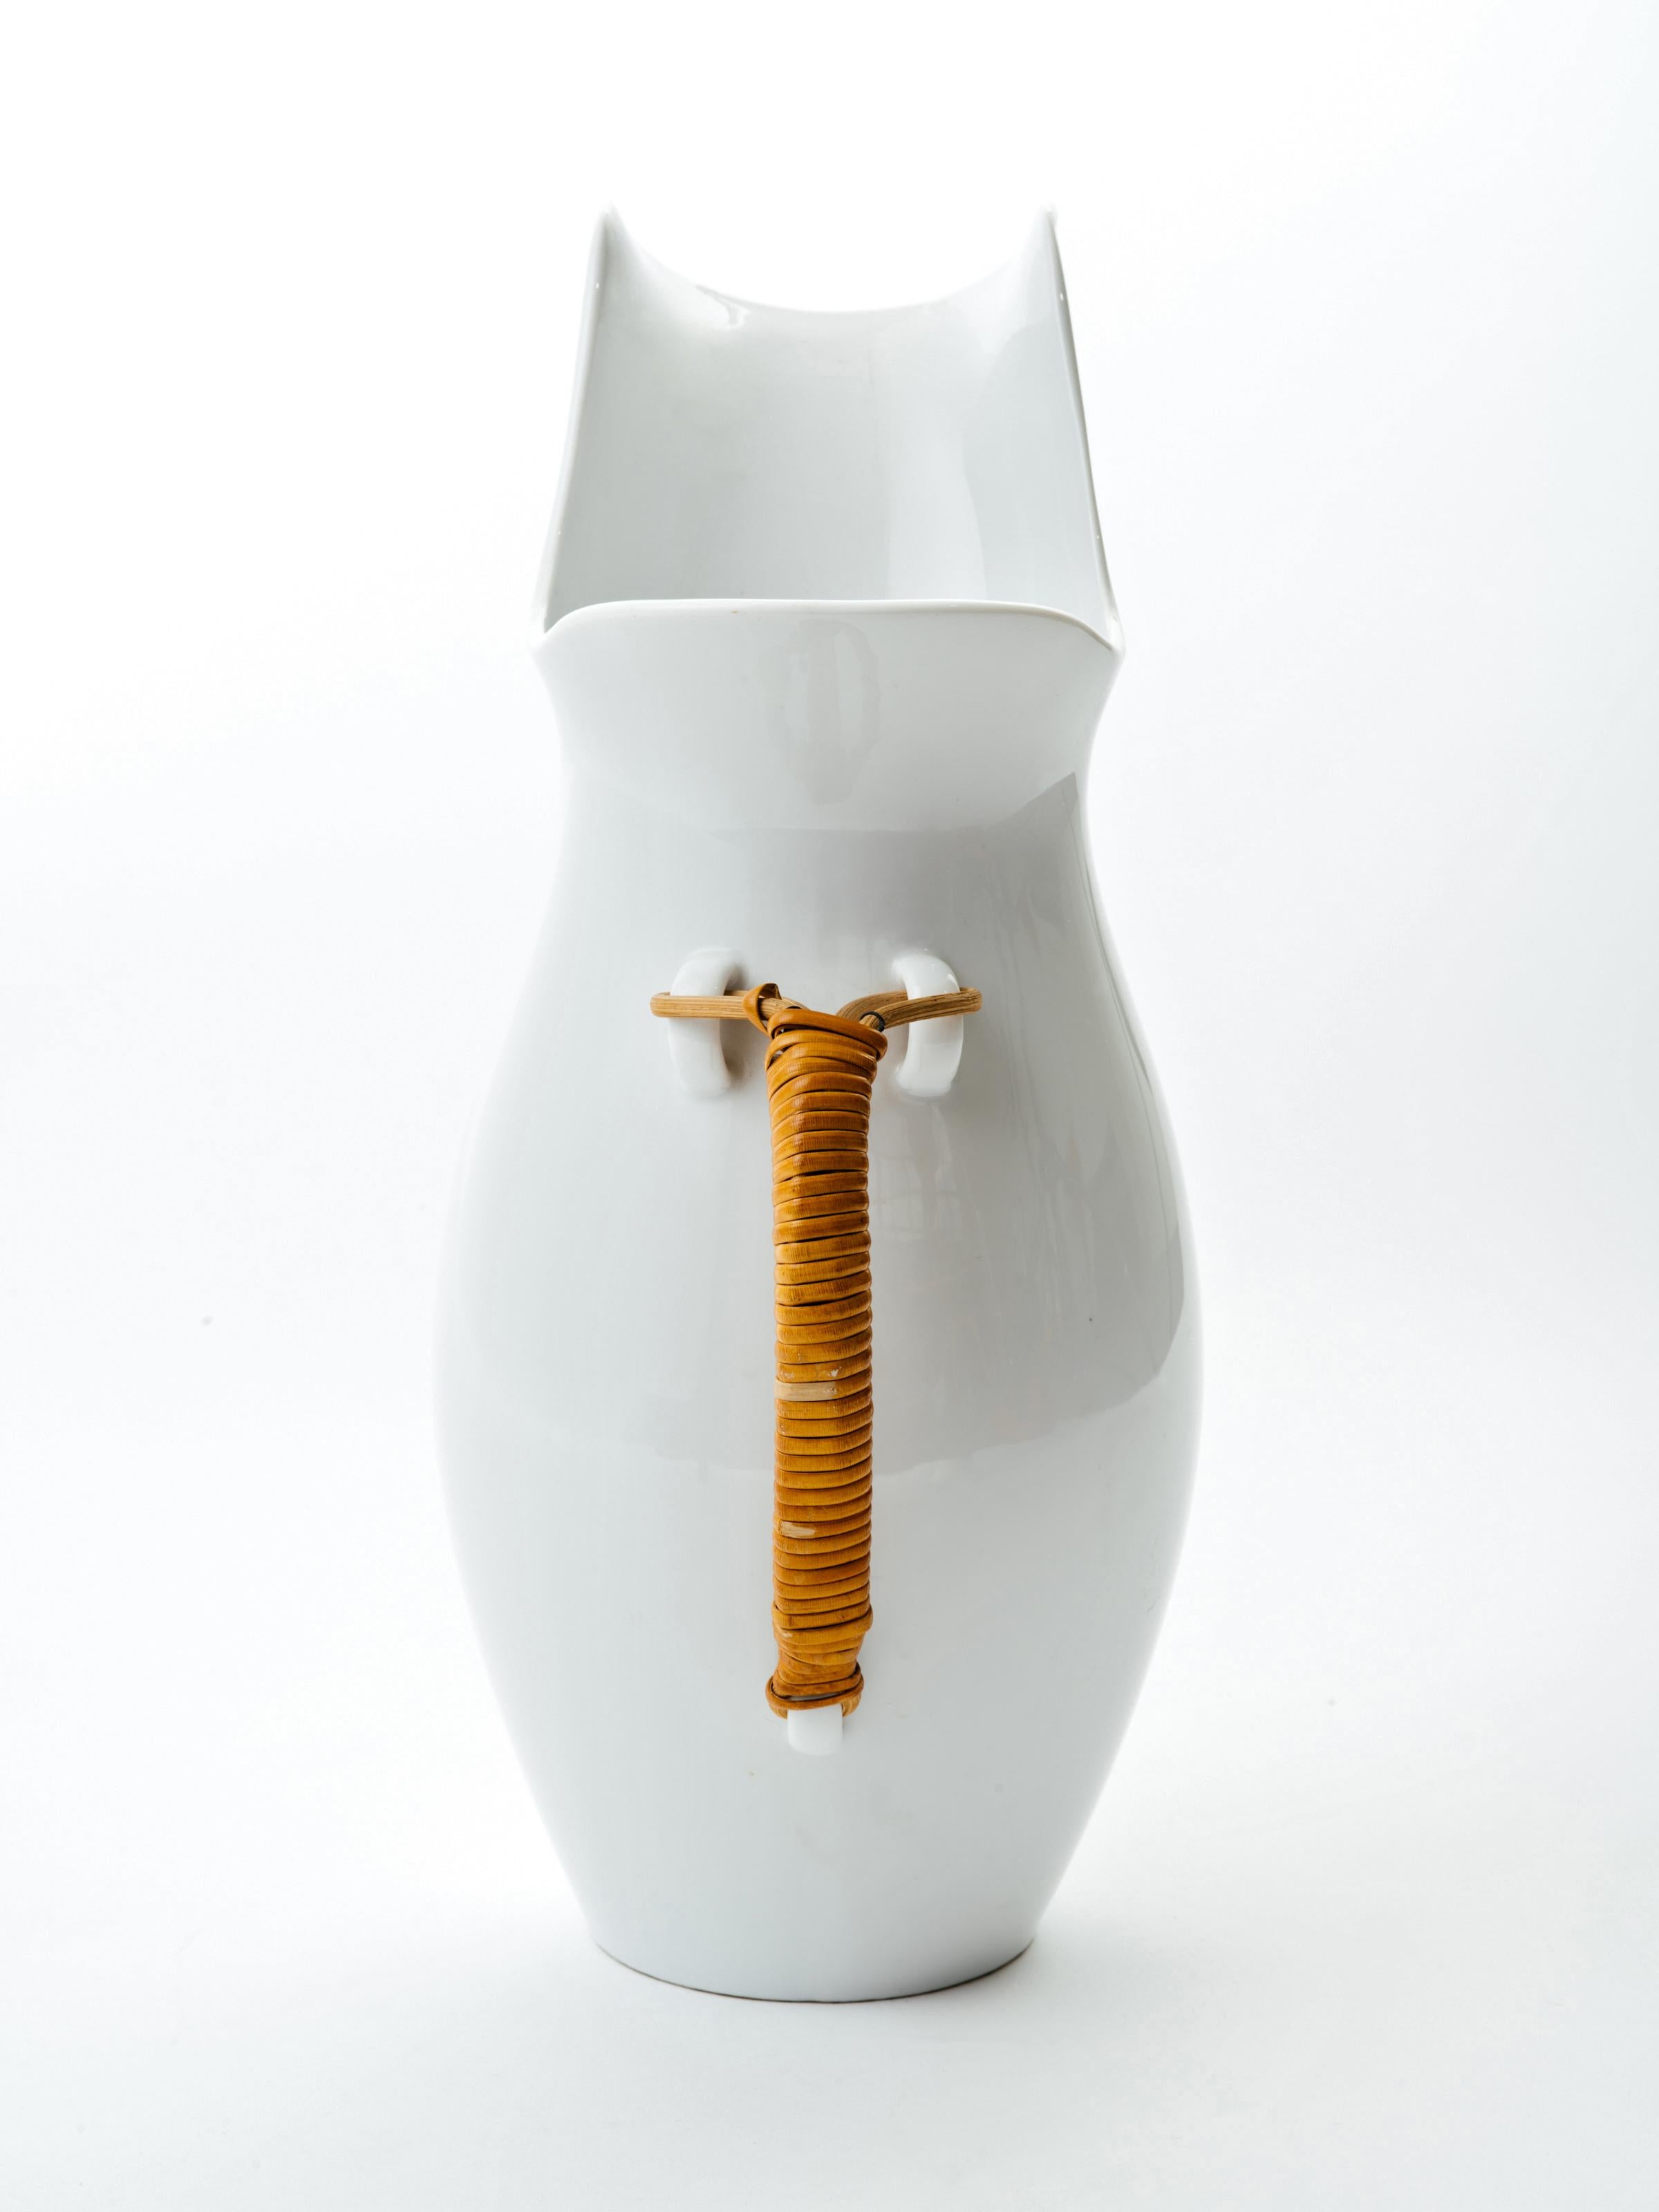 Uncommonly tall pitcher in glazed ceramic by Kenji Fujita for Freeman Lederman. Sensual, minimalist design, signed to the underside.